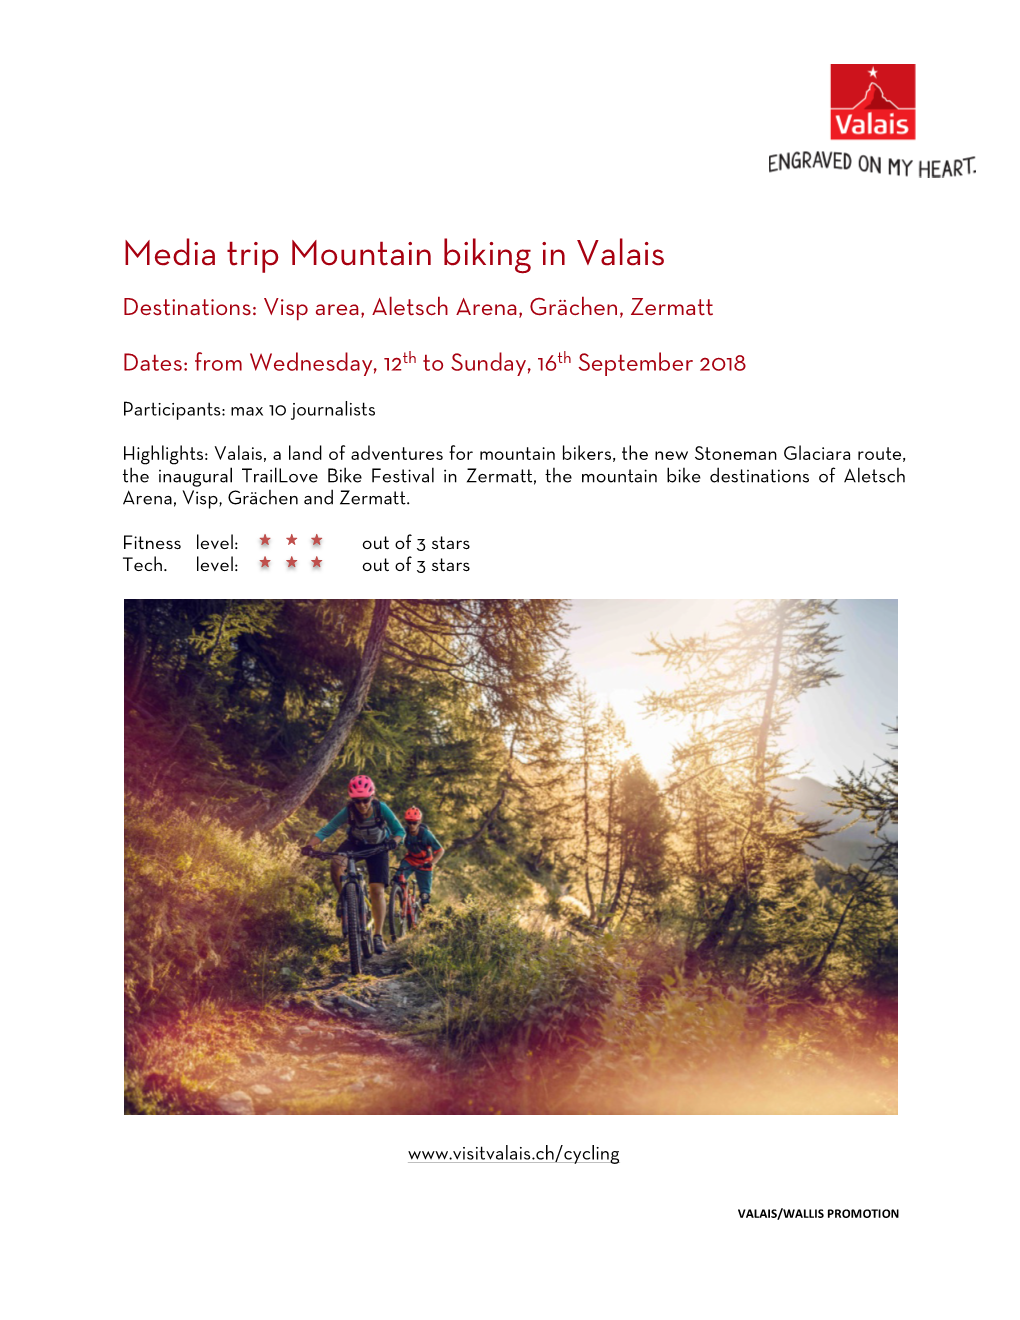 Media Trip Mountain Biking in Valais